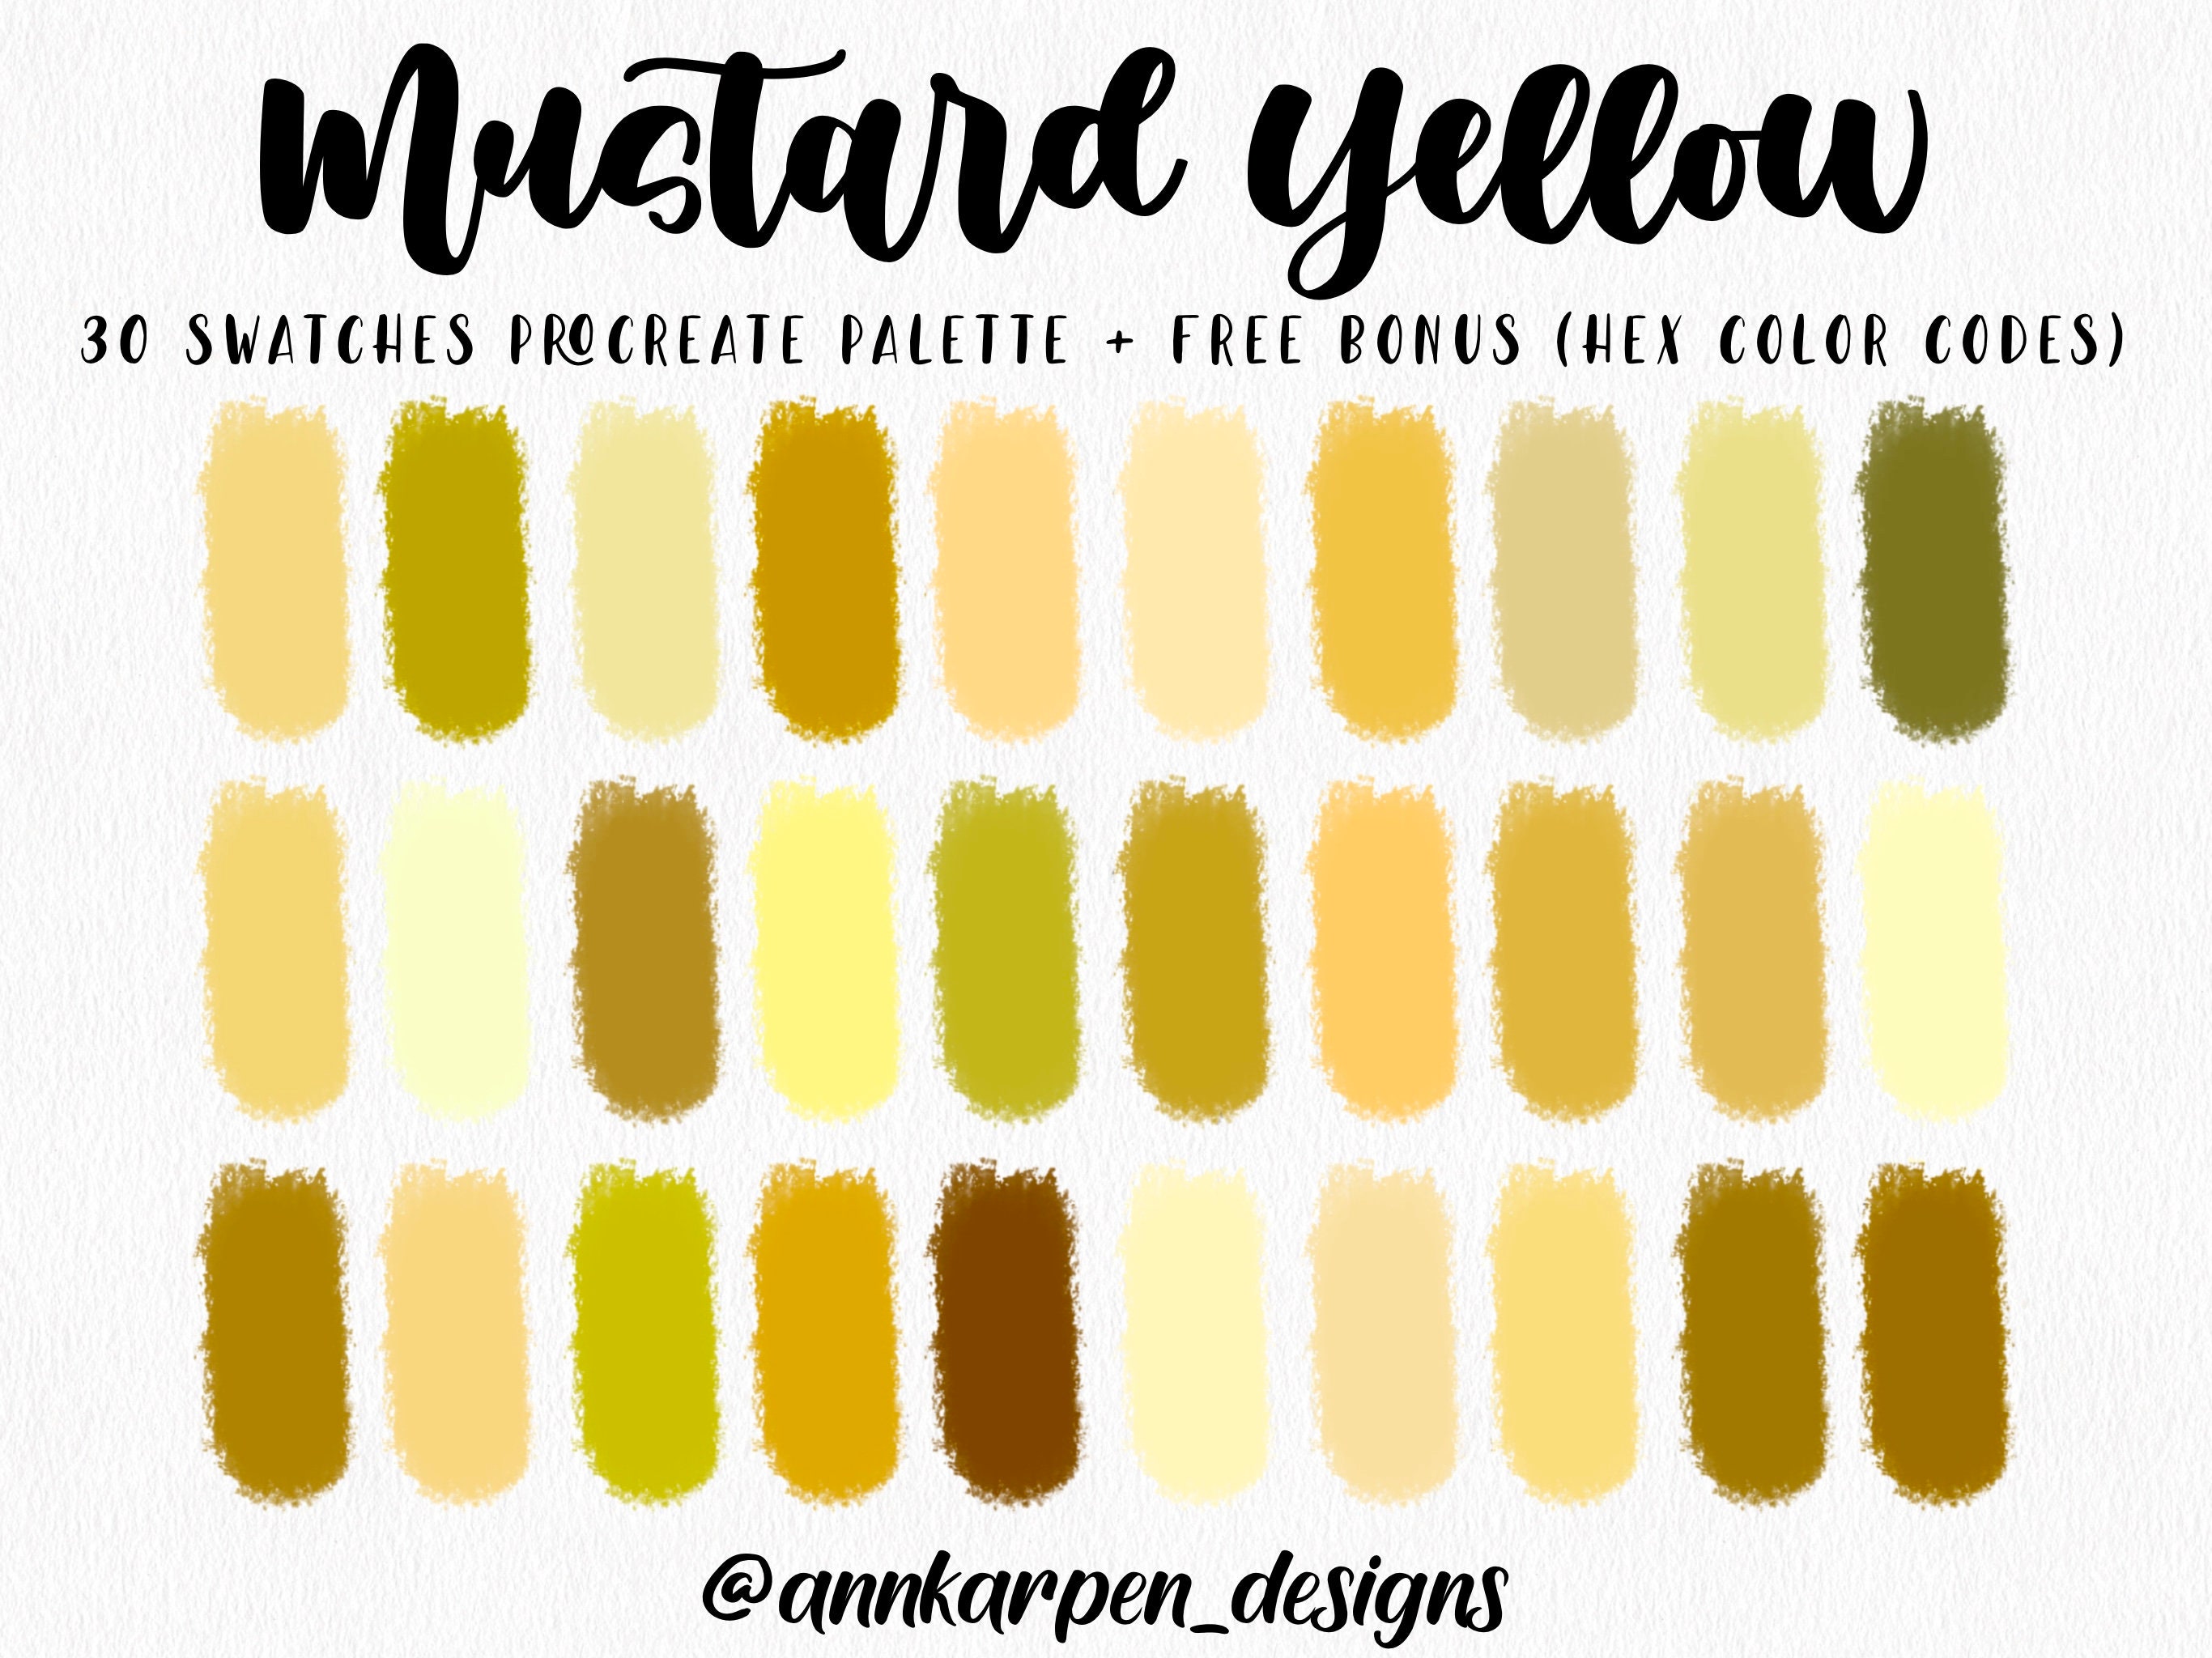 5. "Mustard Yellow" - wide 3